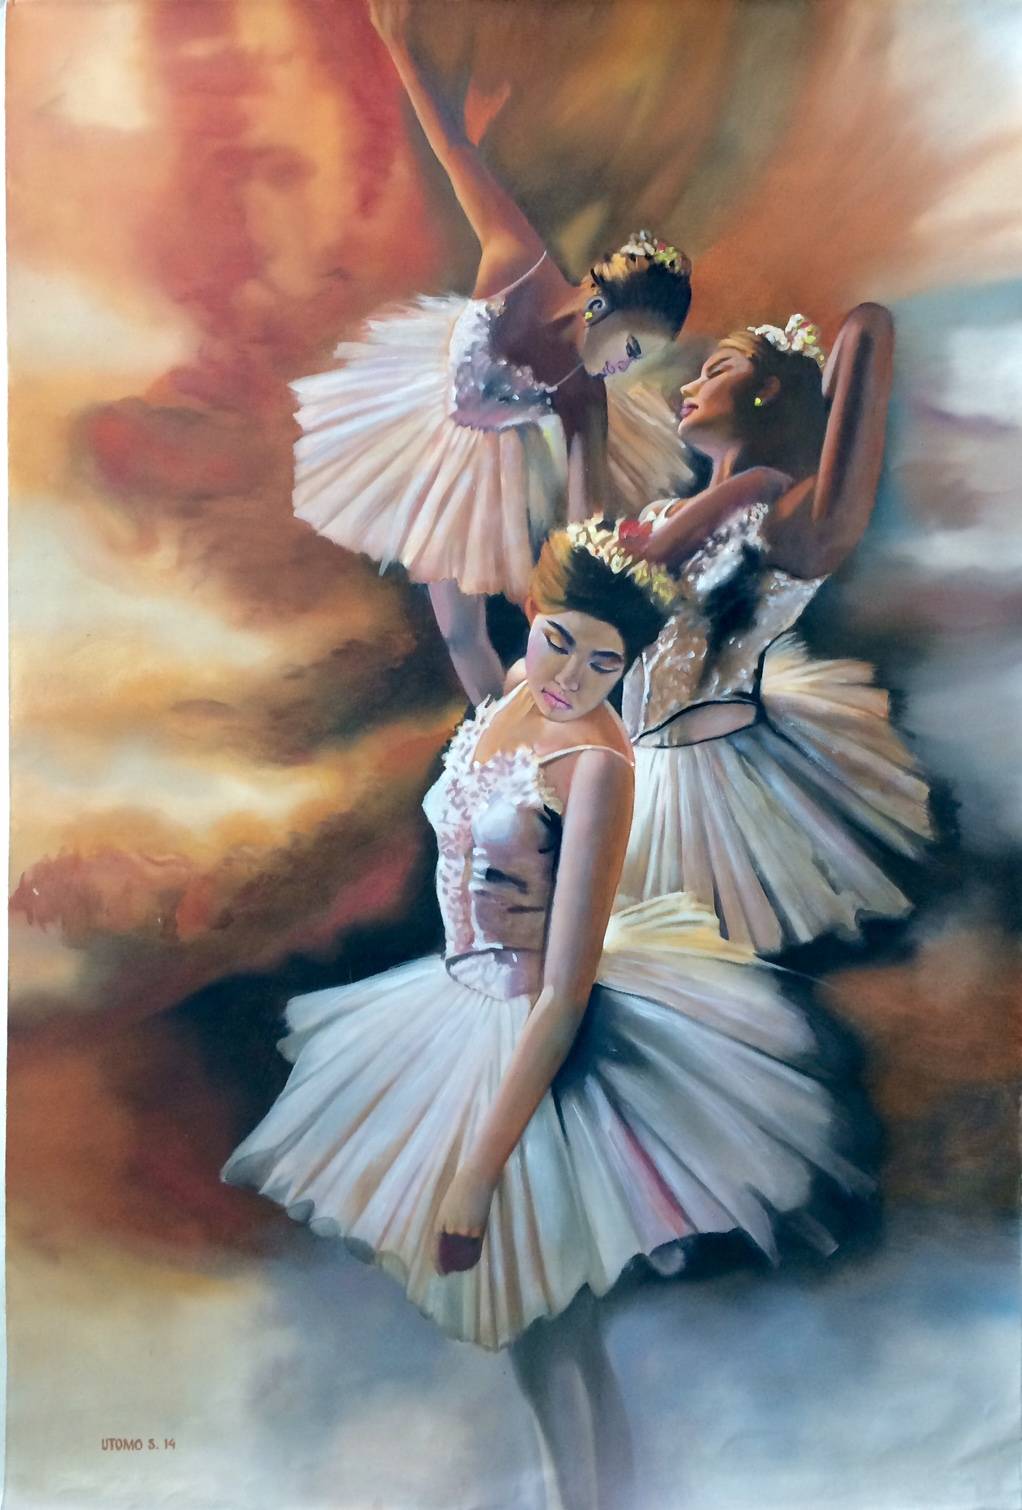 Teenager Ballerinas, 2014